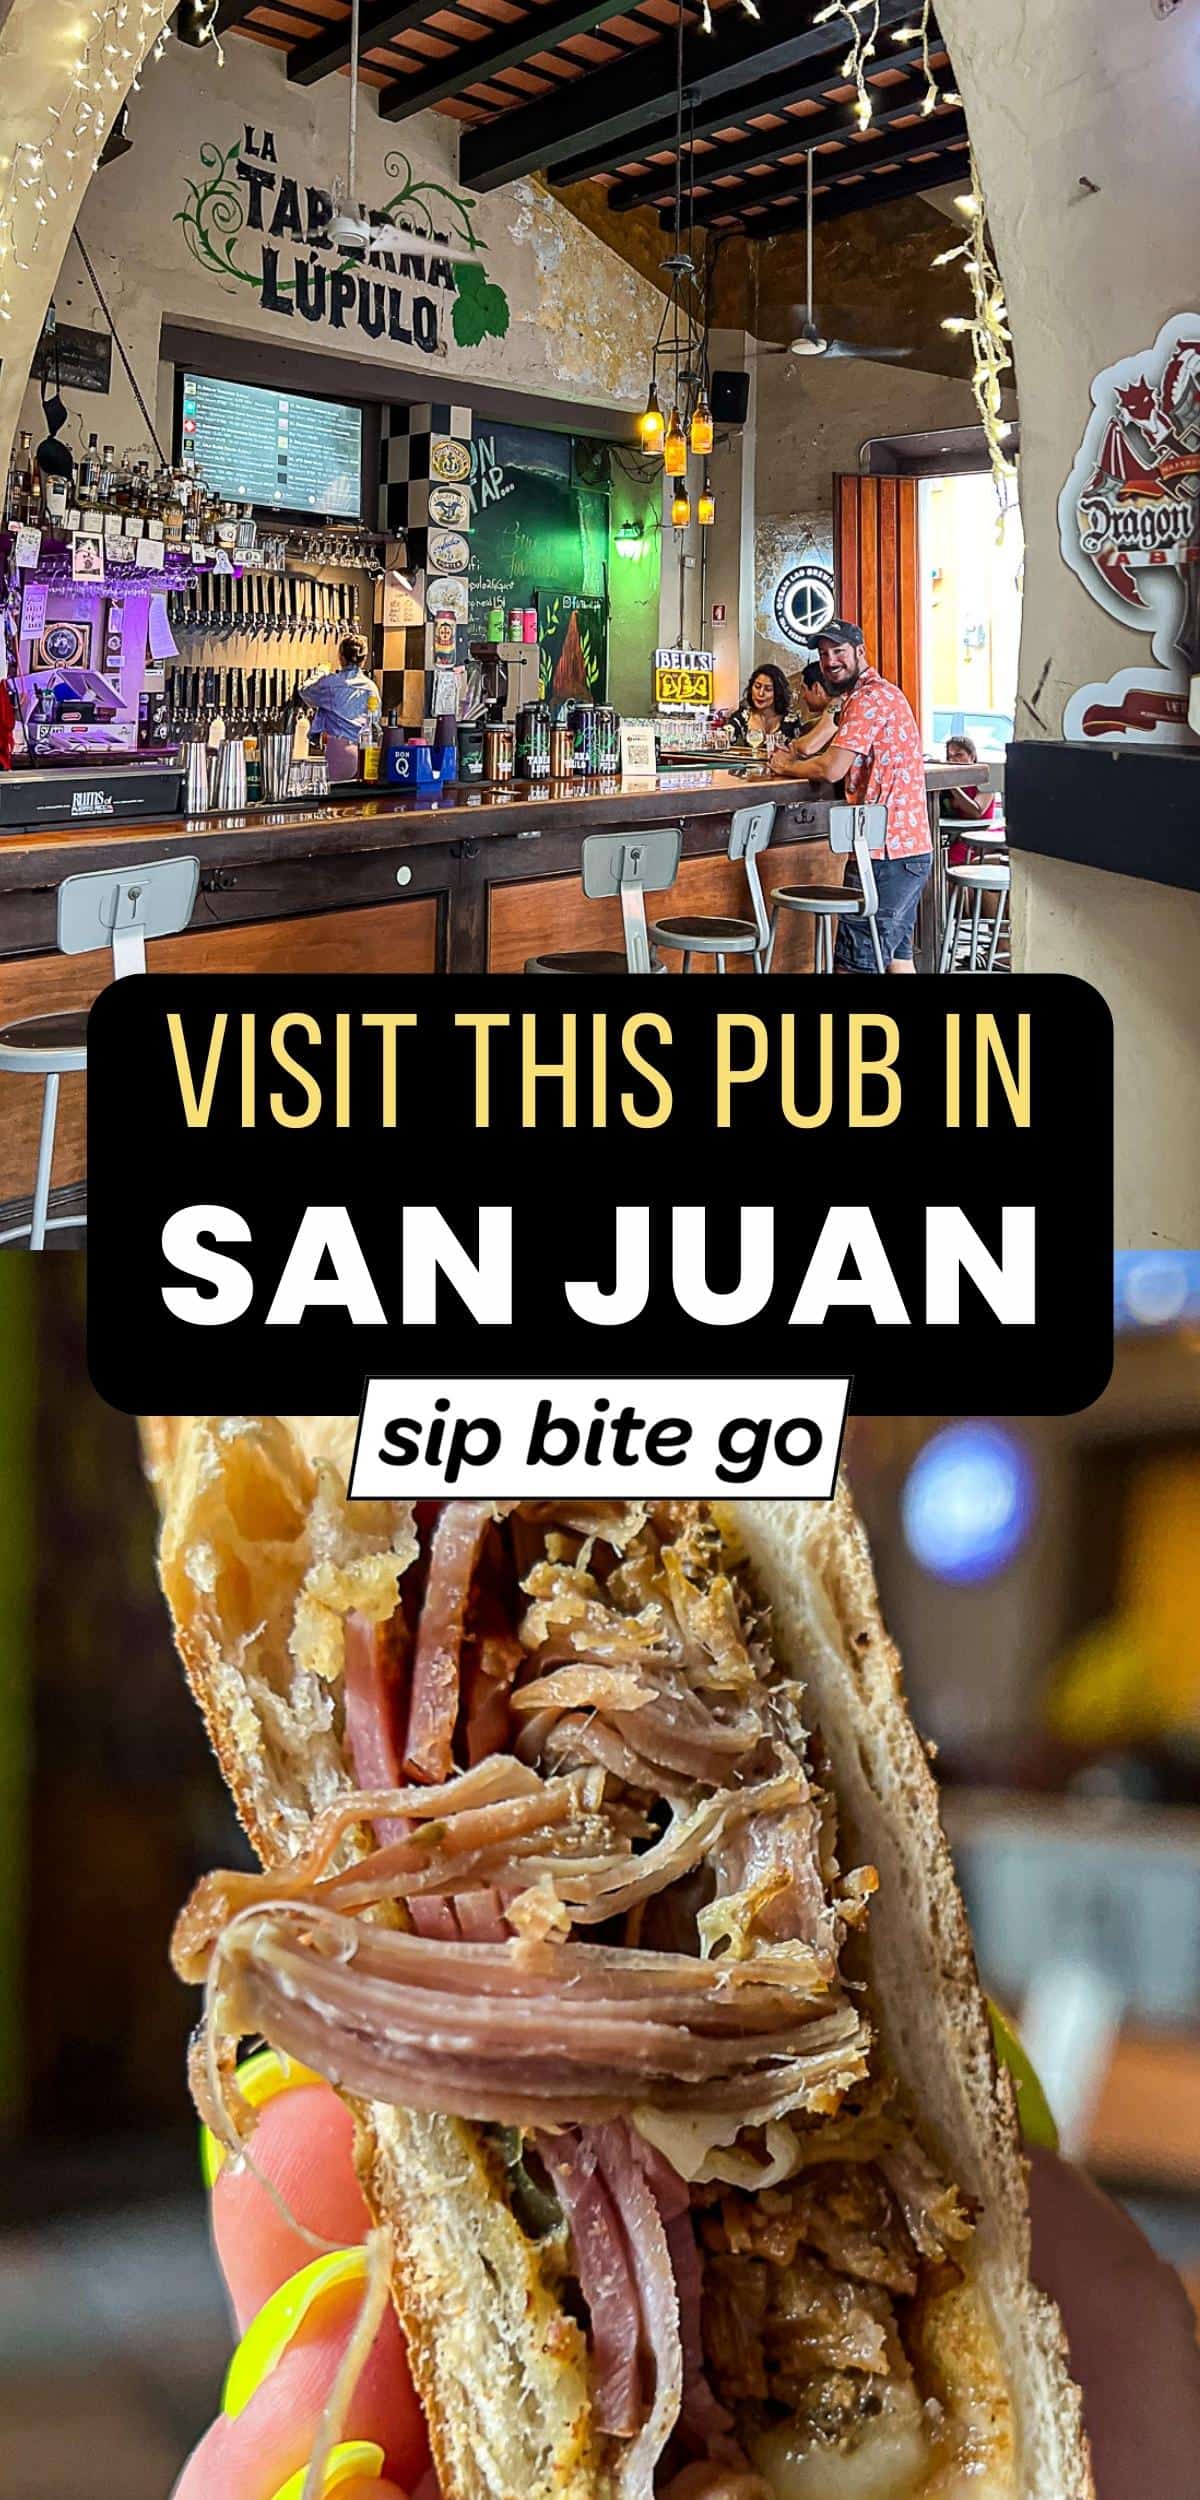 La Taberna Lúpulo Restaurant Photos in San Juan with Text overlay and Sip Bite Go logo